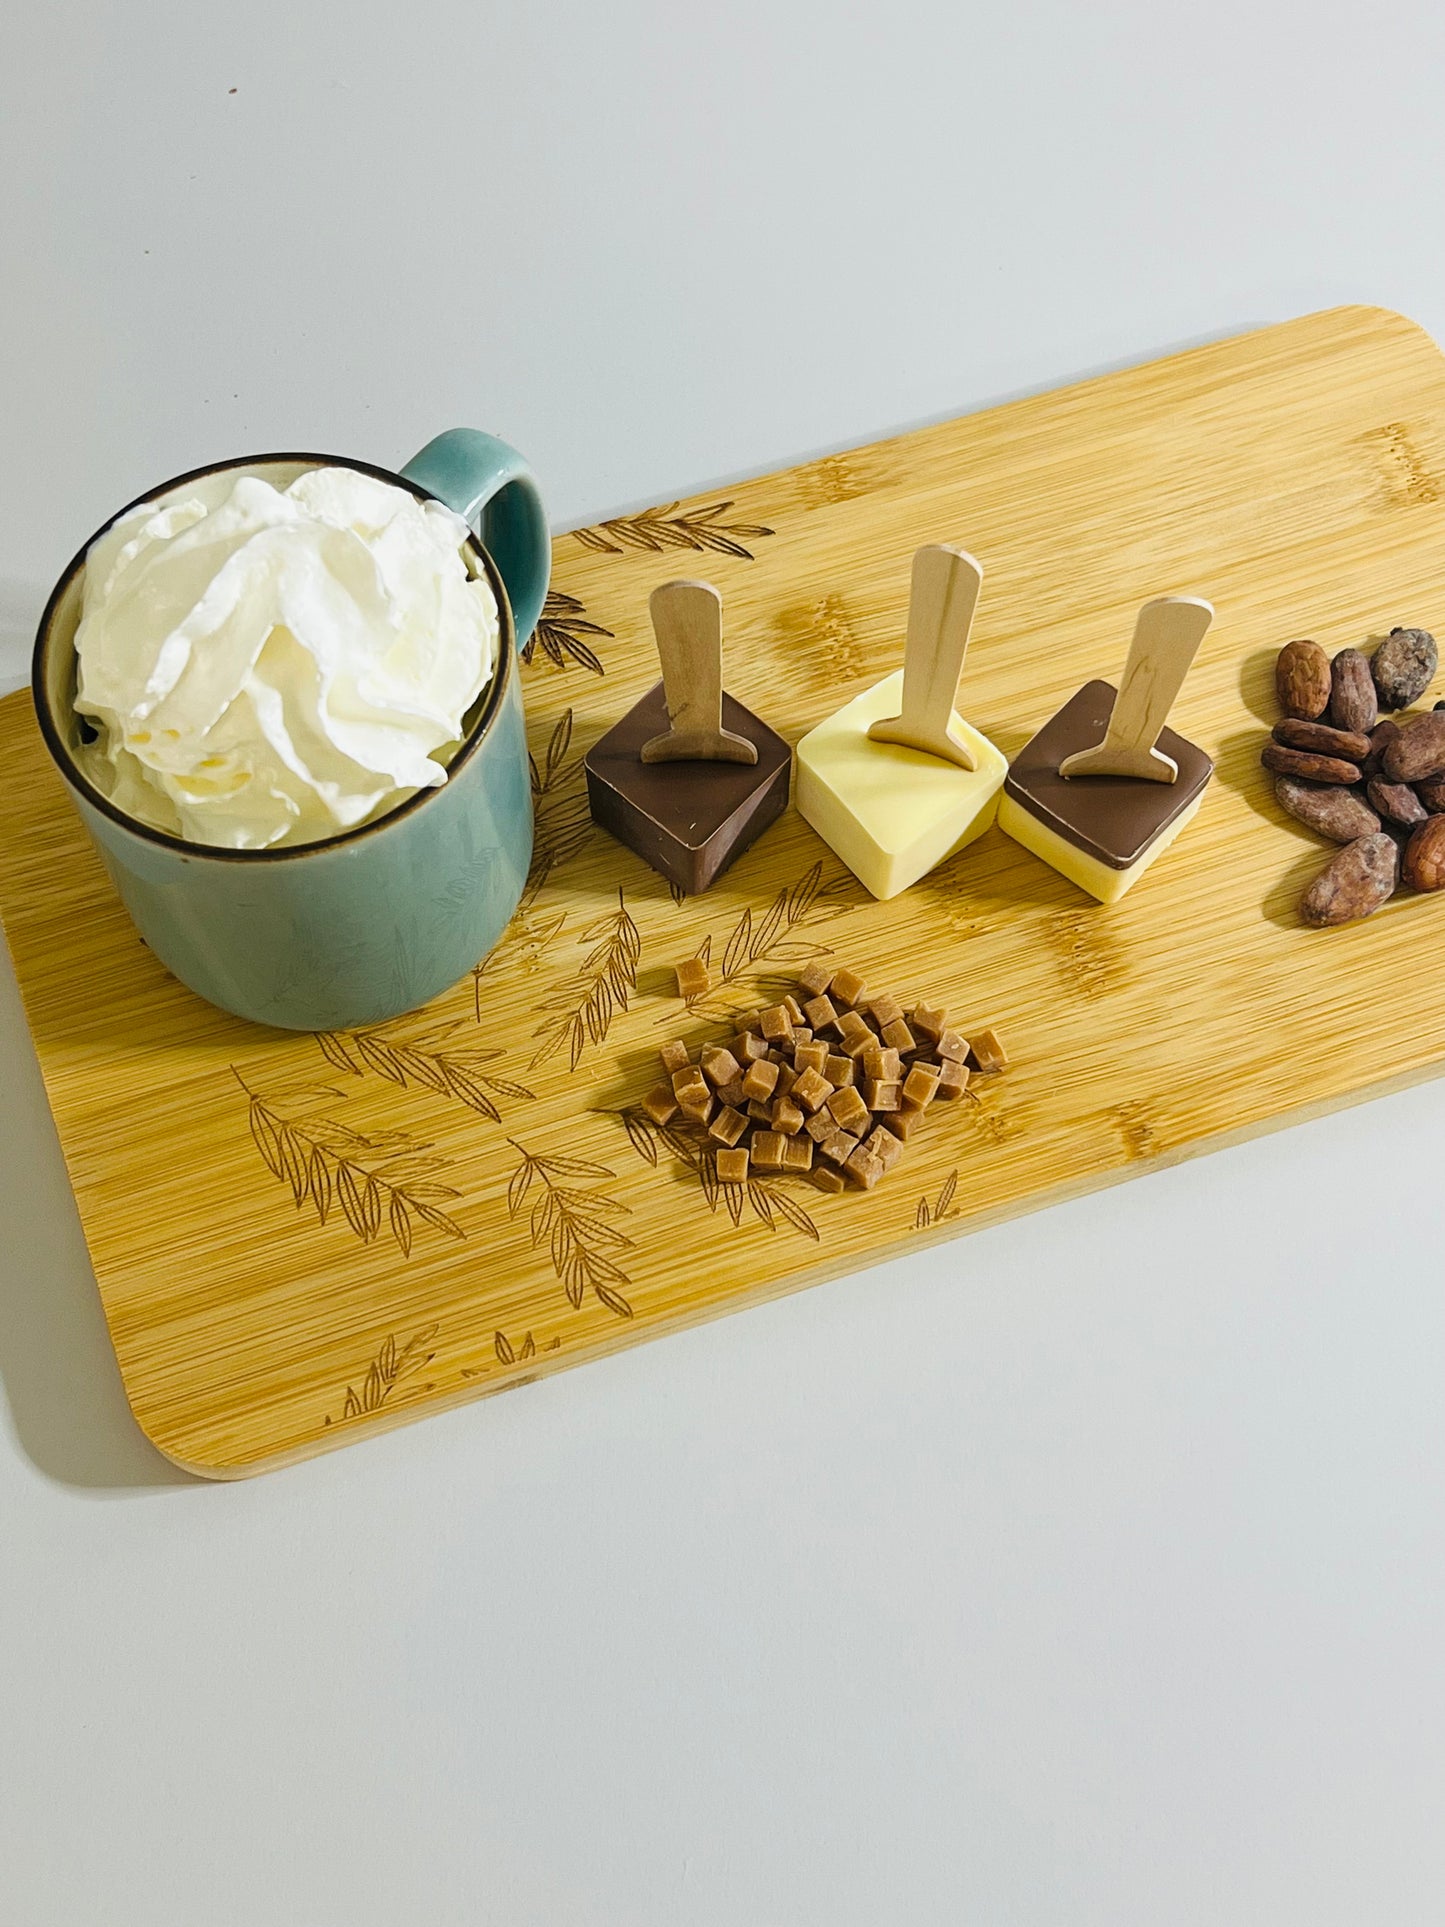 Hot Chocolate Spoon - with Caramel Fudge